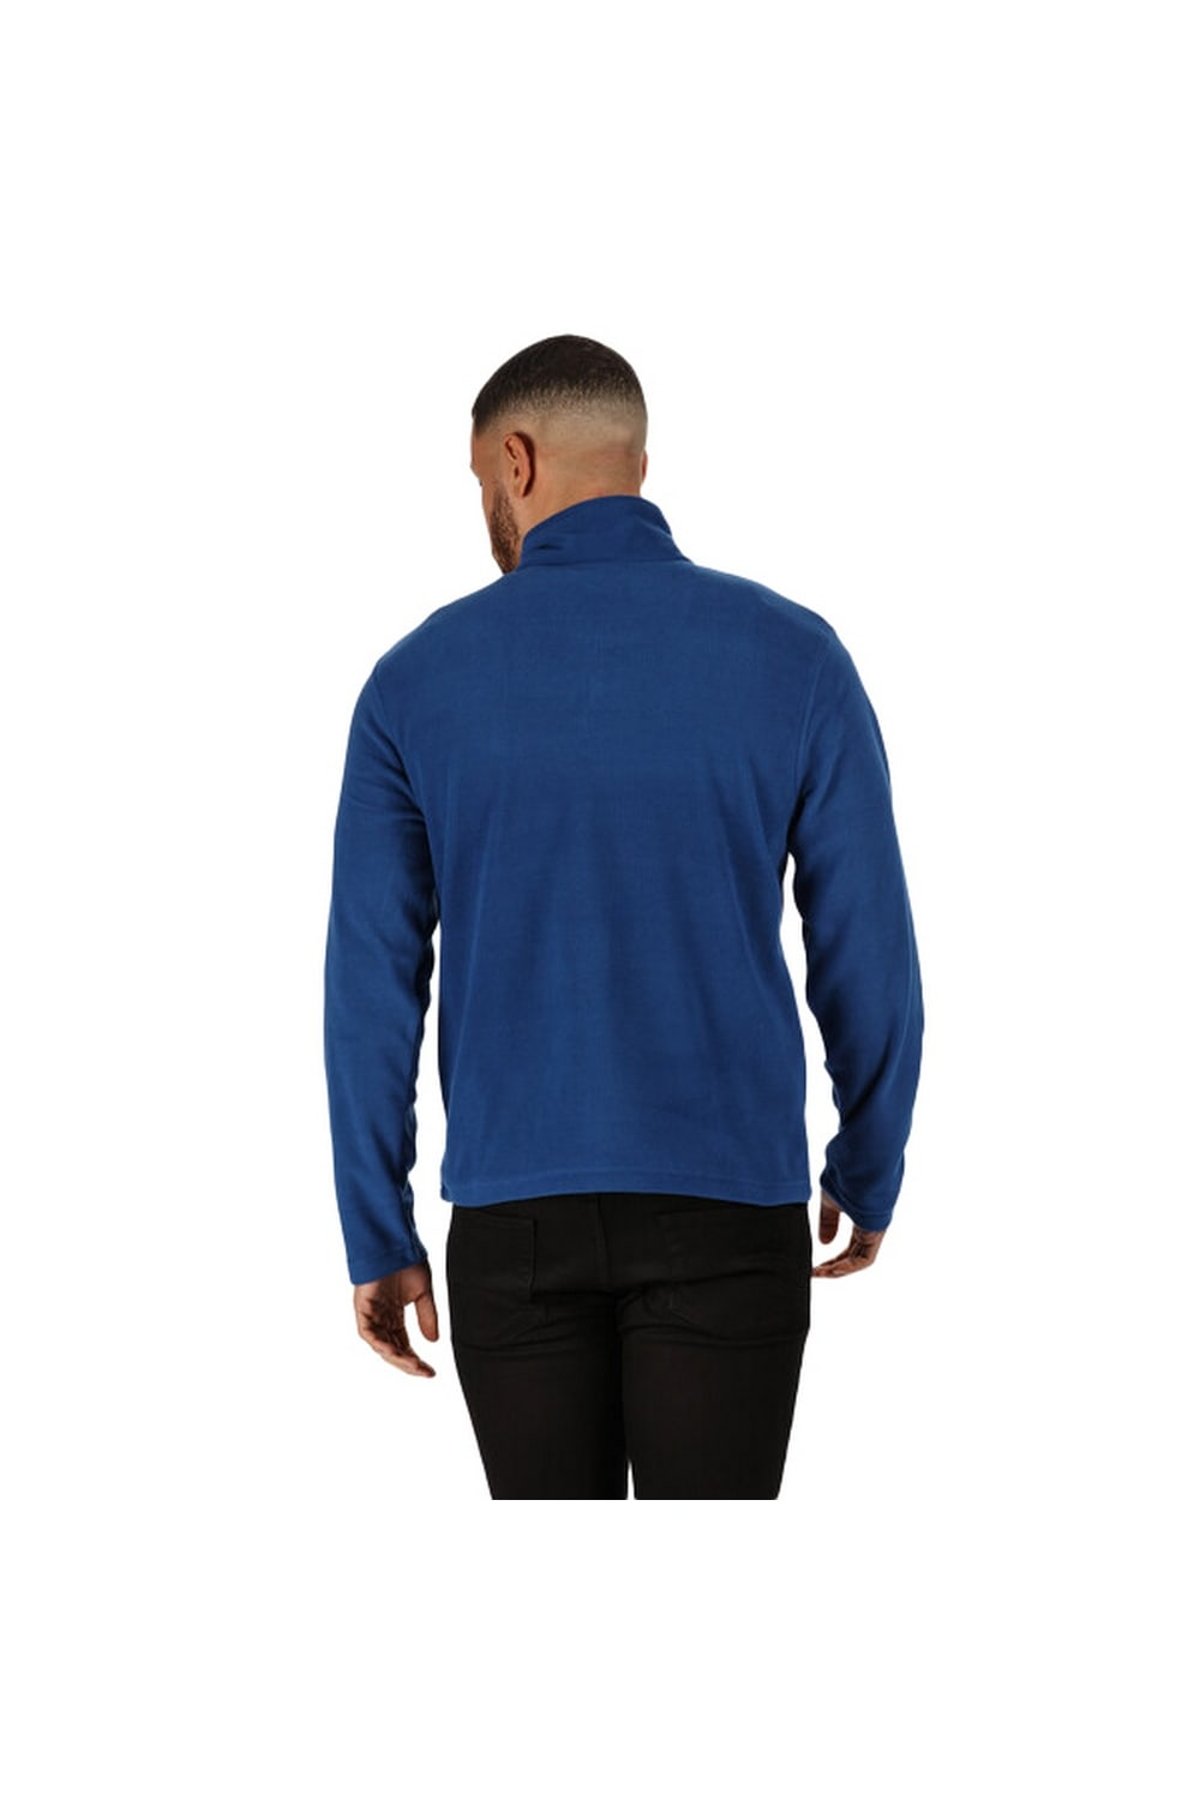 Details about   Professional Men's Micro Zip Neck Fleece Blue 